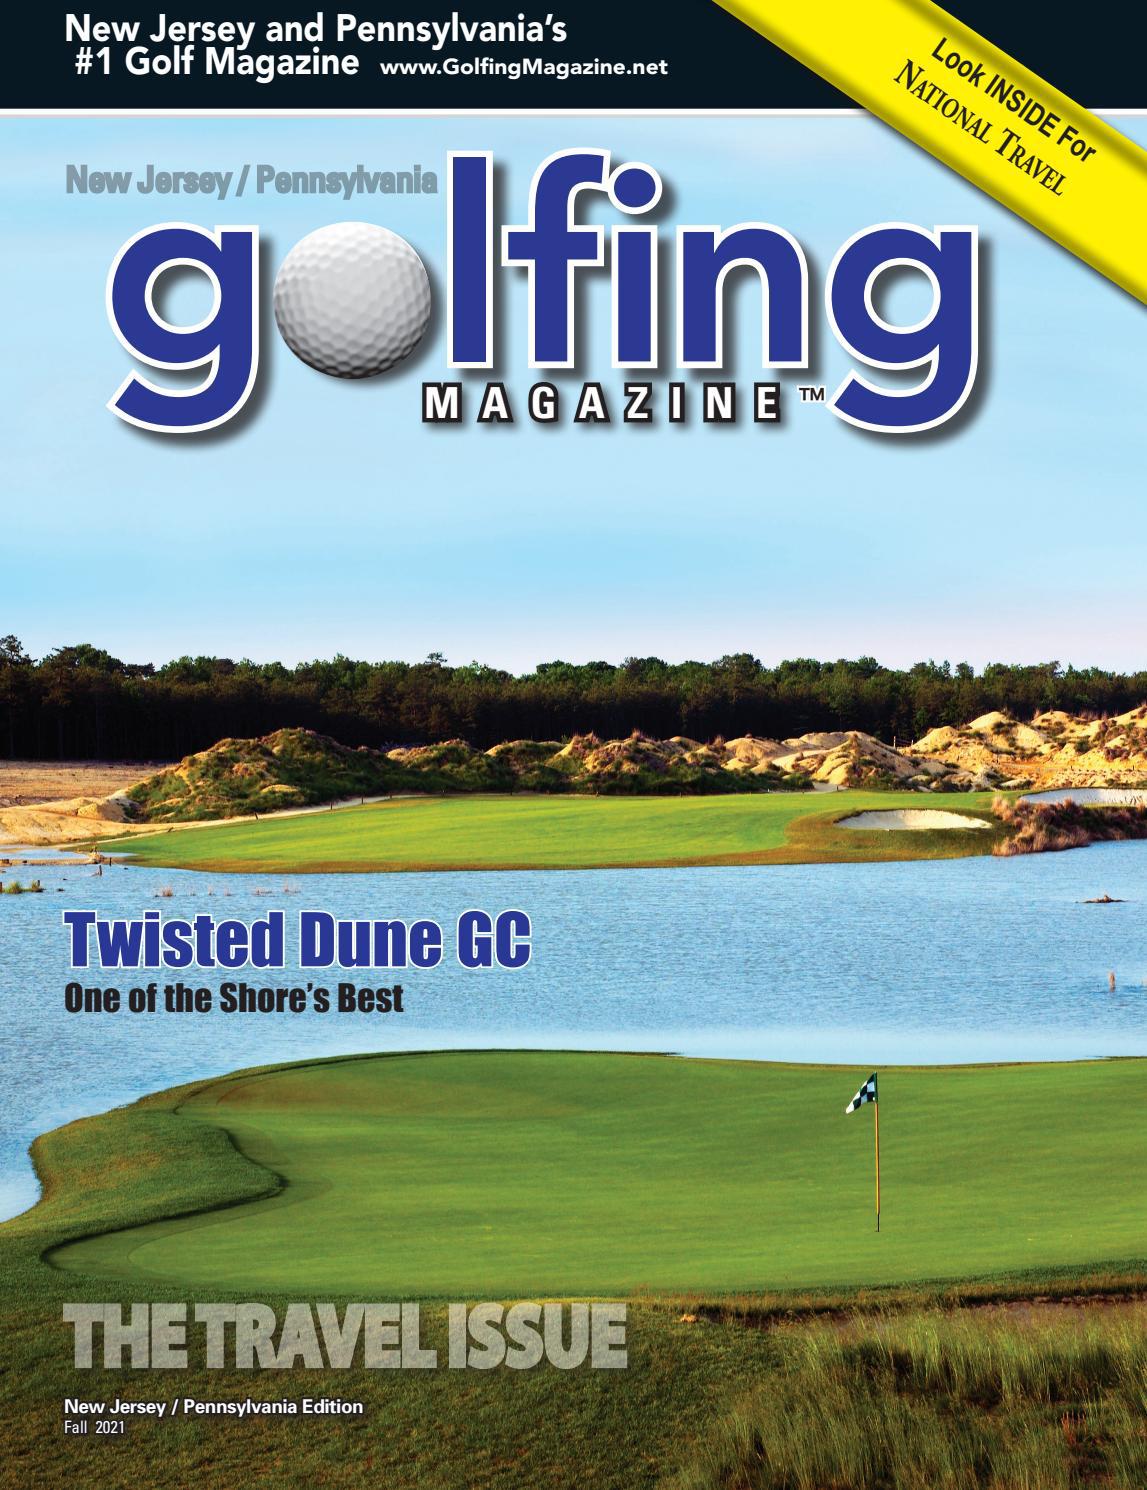 2021 Golfing Magazine New Jersey / Eastern Pennsylvania Fall Issue